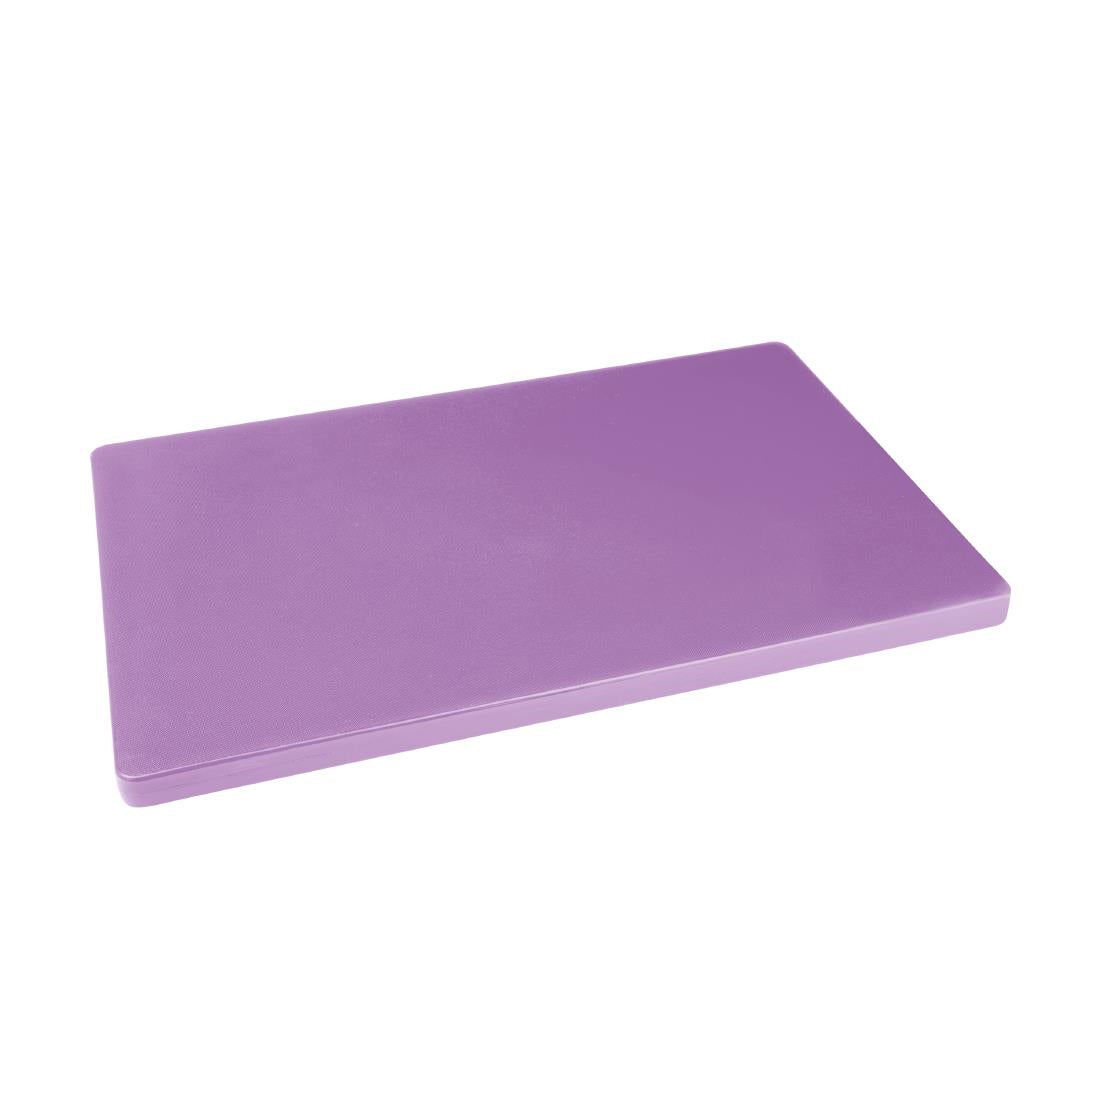 FX107 Hygiplas Low Density Chopping Board Purple - 300x450x20mm JD Catering Equipment Solutions Ltd